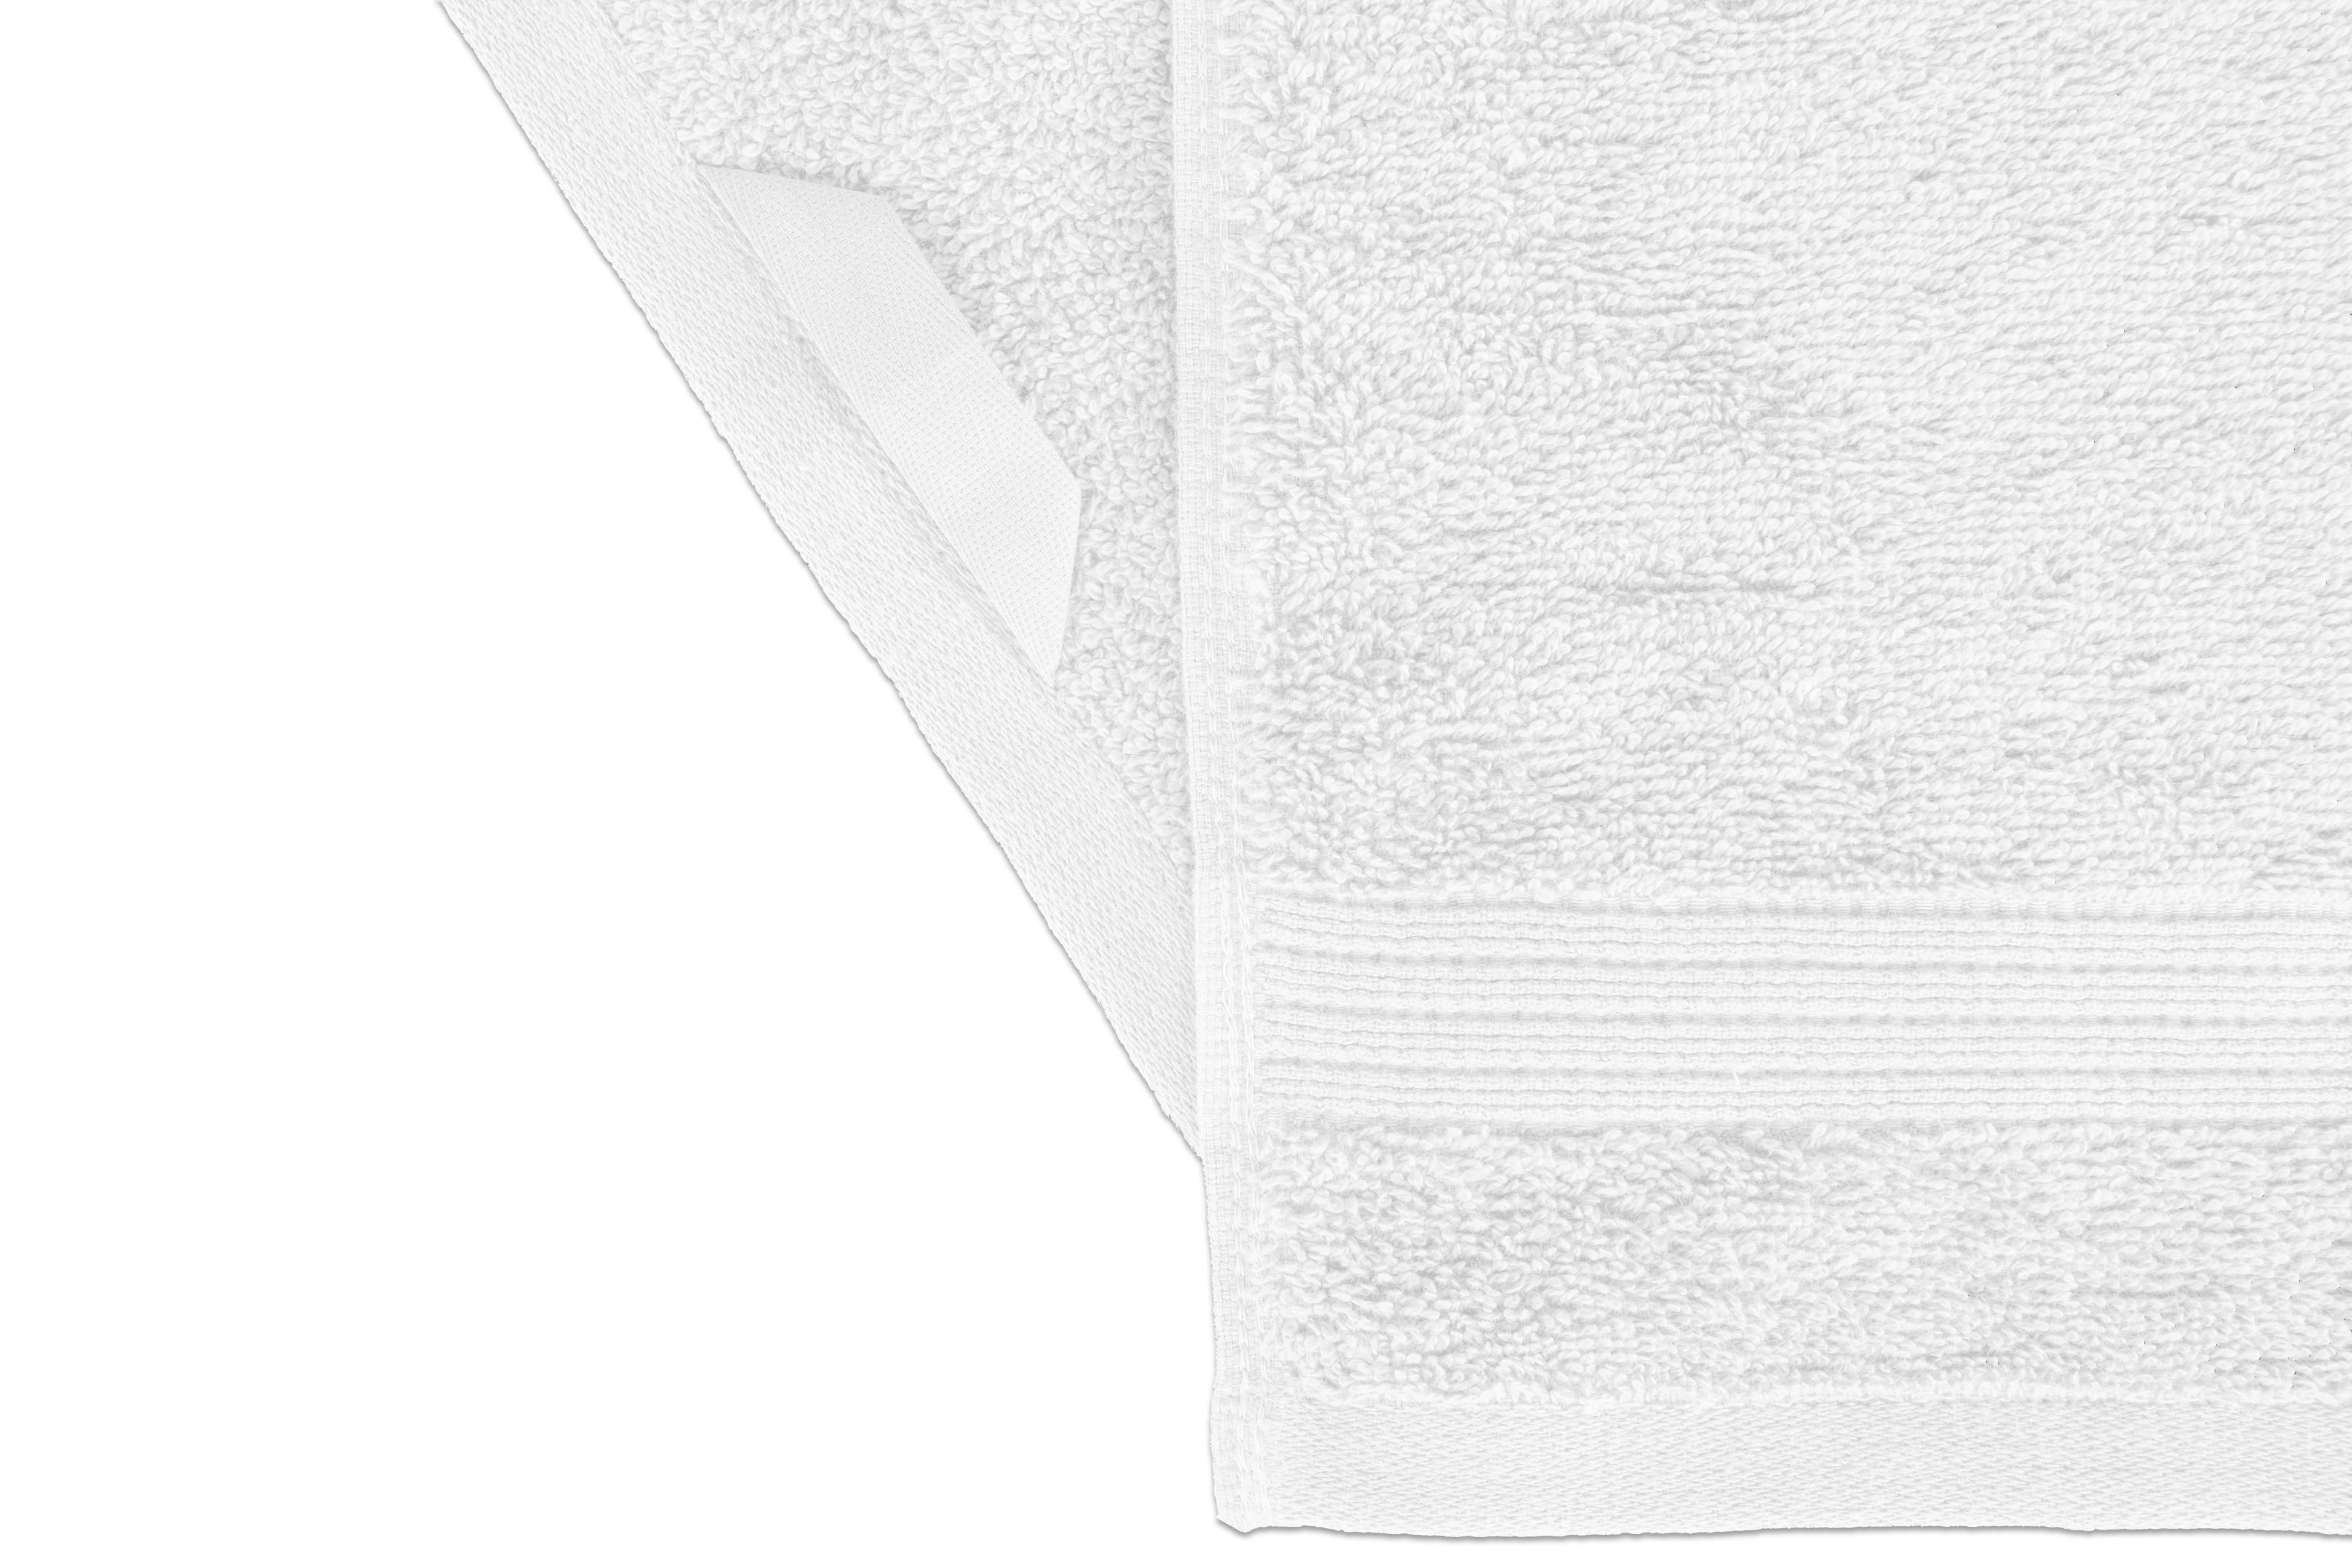 Bath towel EDEN 70x140cm, star white